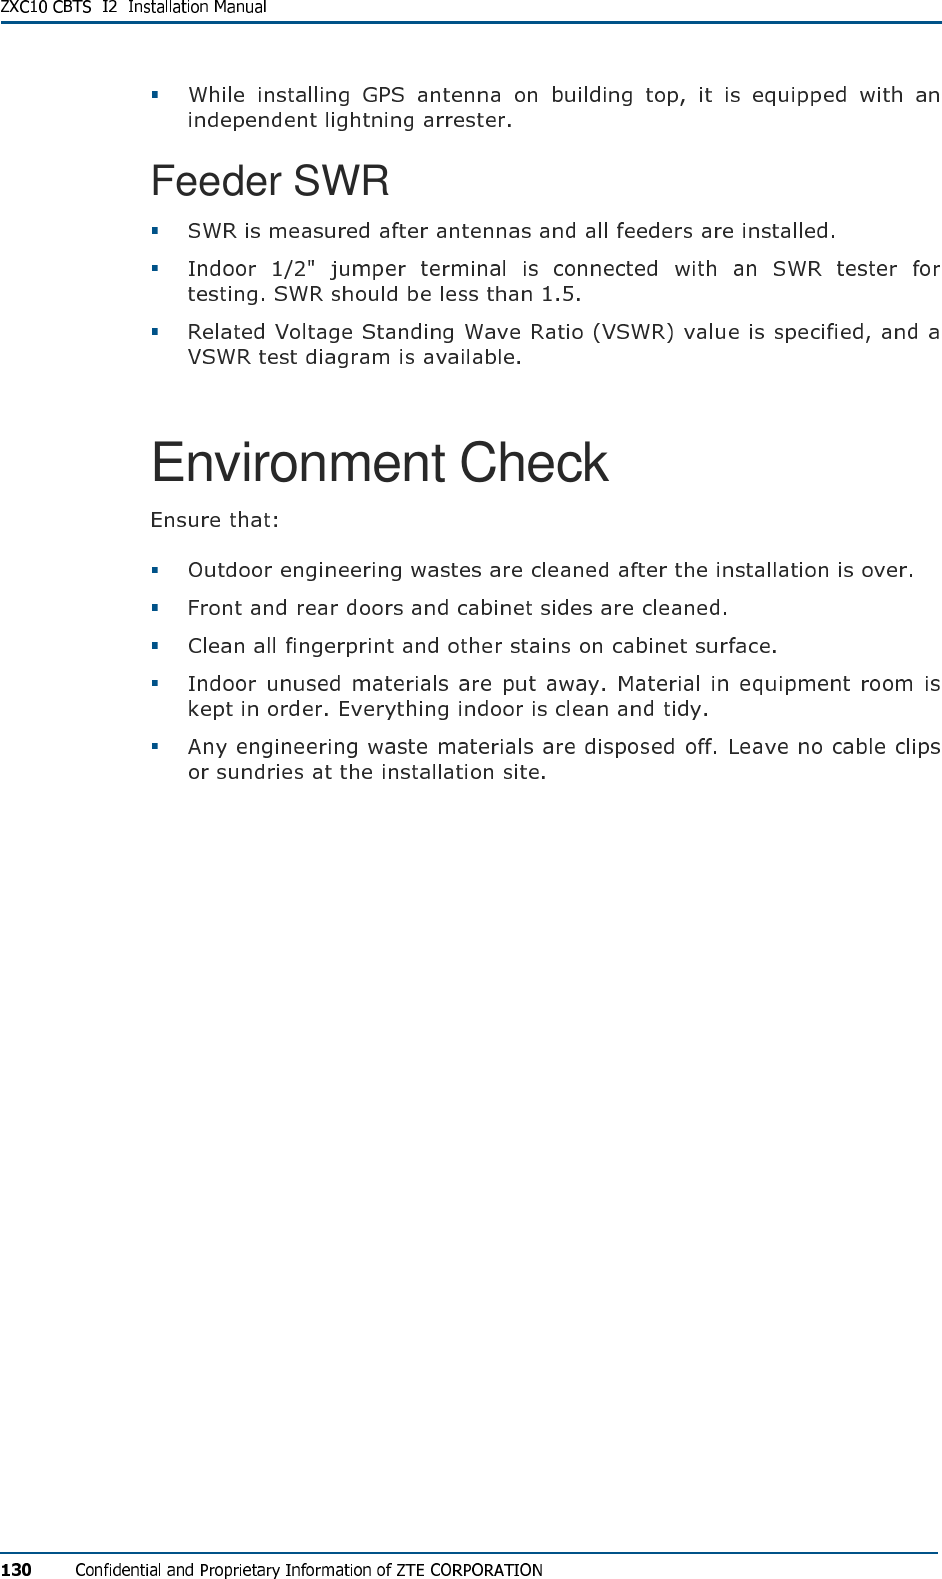  Feeder SWR    Environment Check      